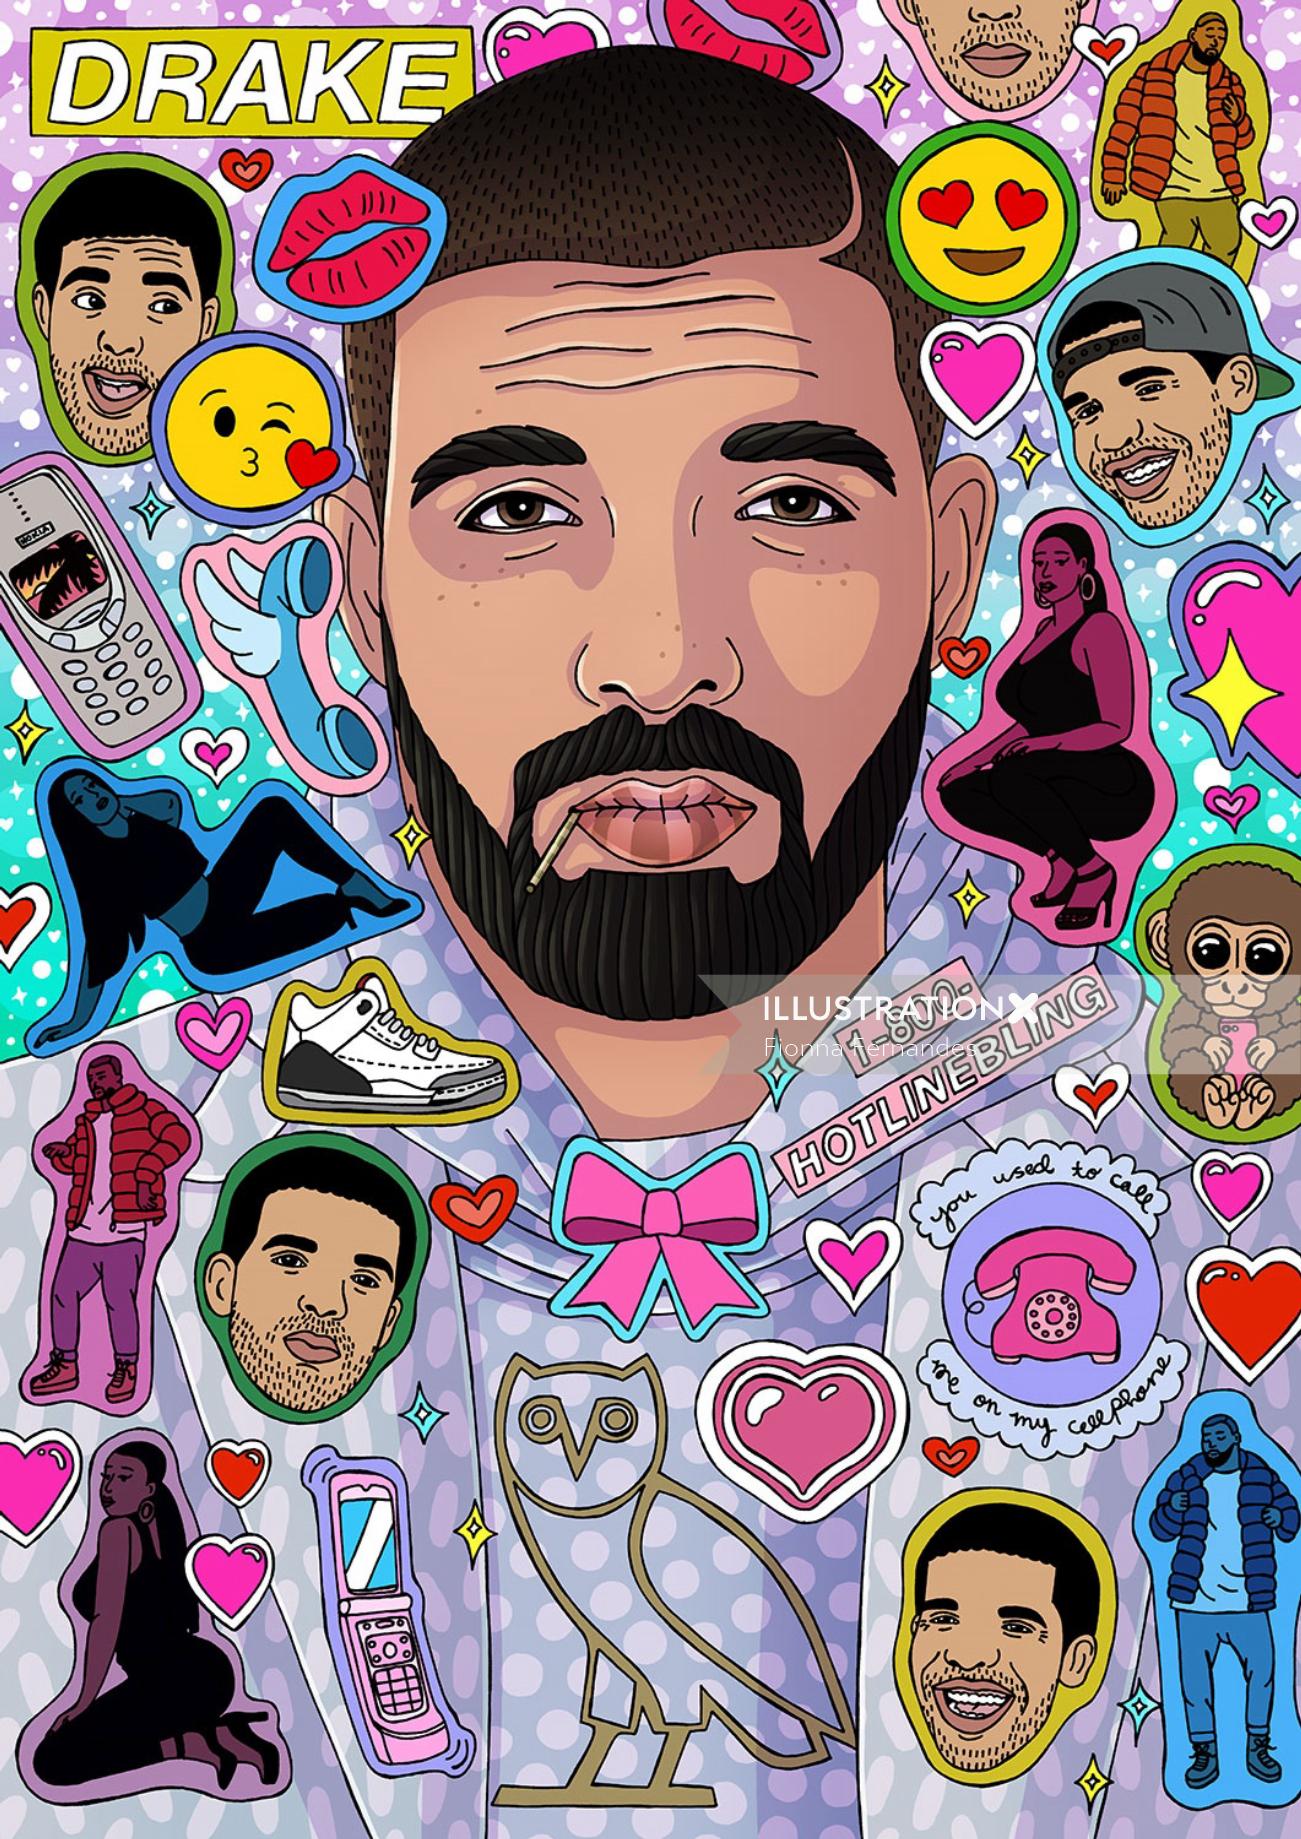 Arte finala do retrato de Drake pelo ilustrador baseado Sydney